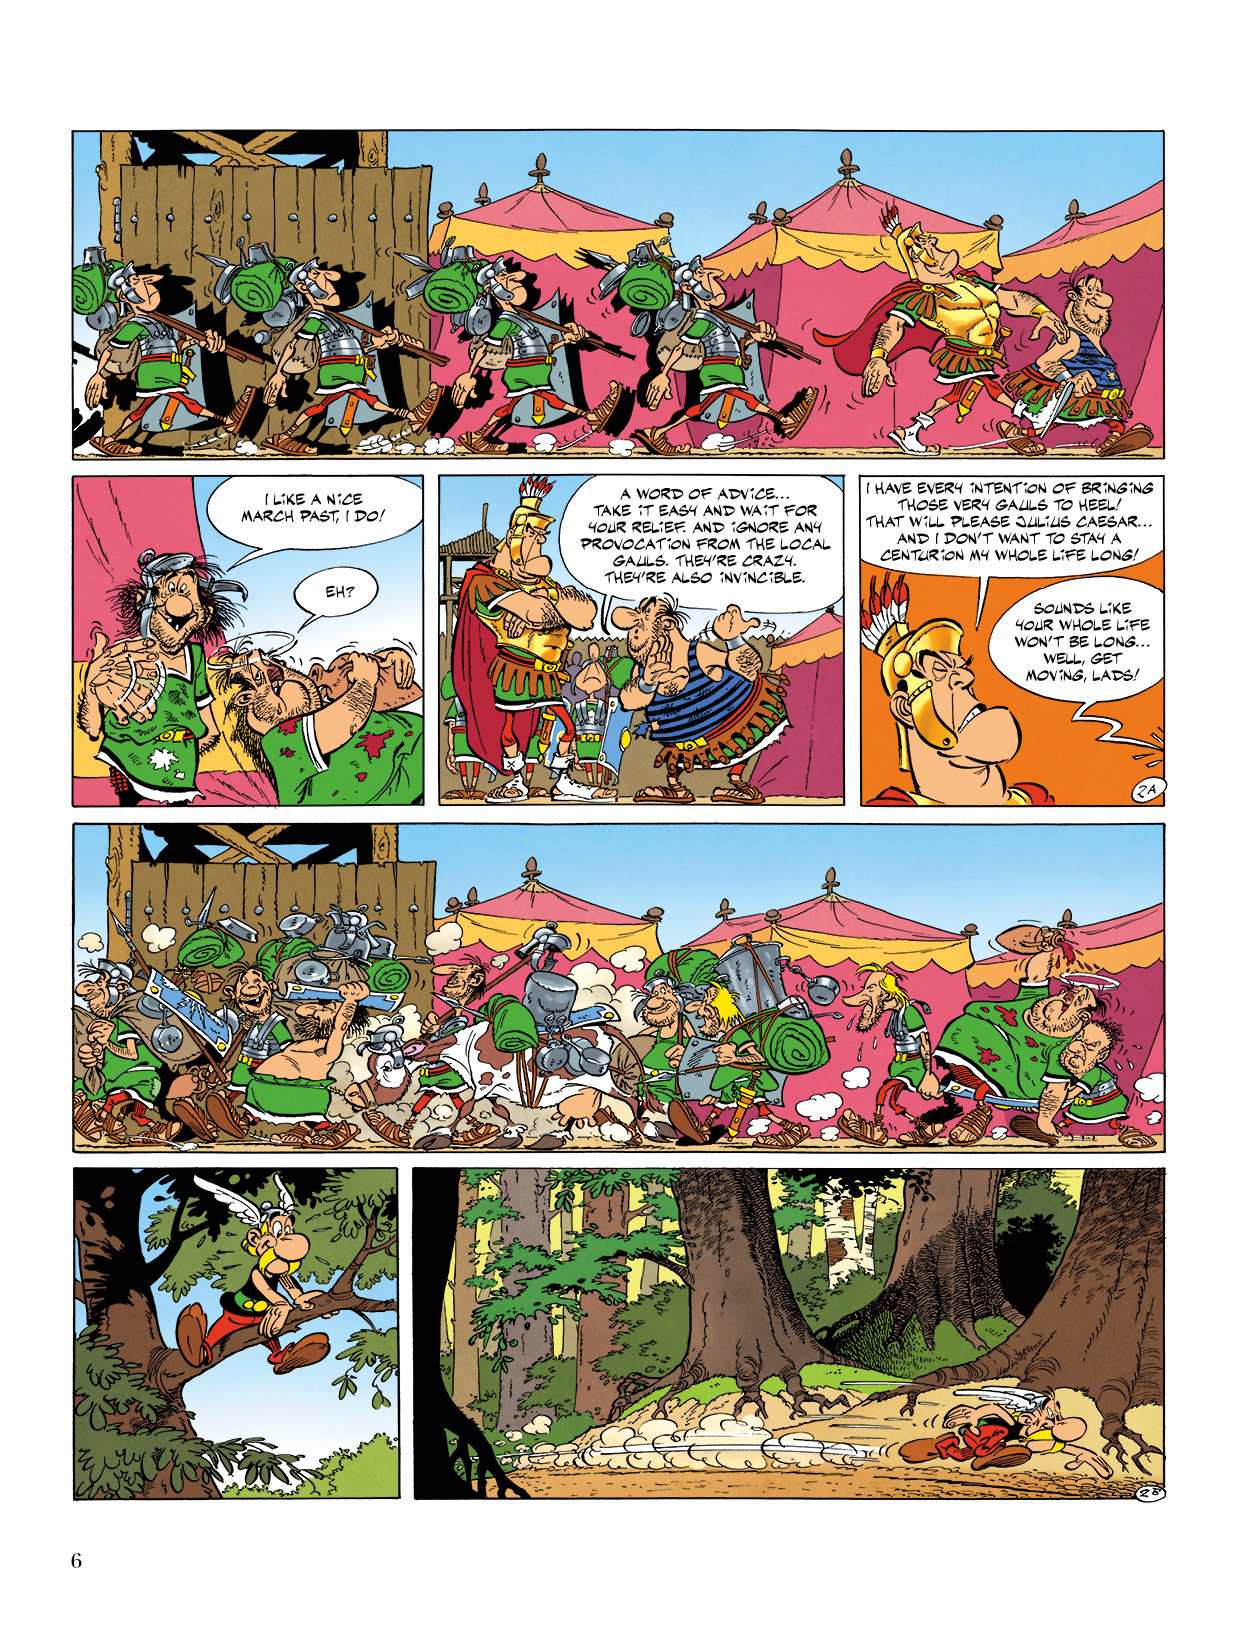 verlamming Mijnwerker Storing Read Comics Online Free - Asterix Comic Book Issue #023 - Page 7